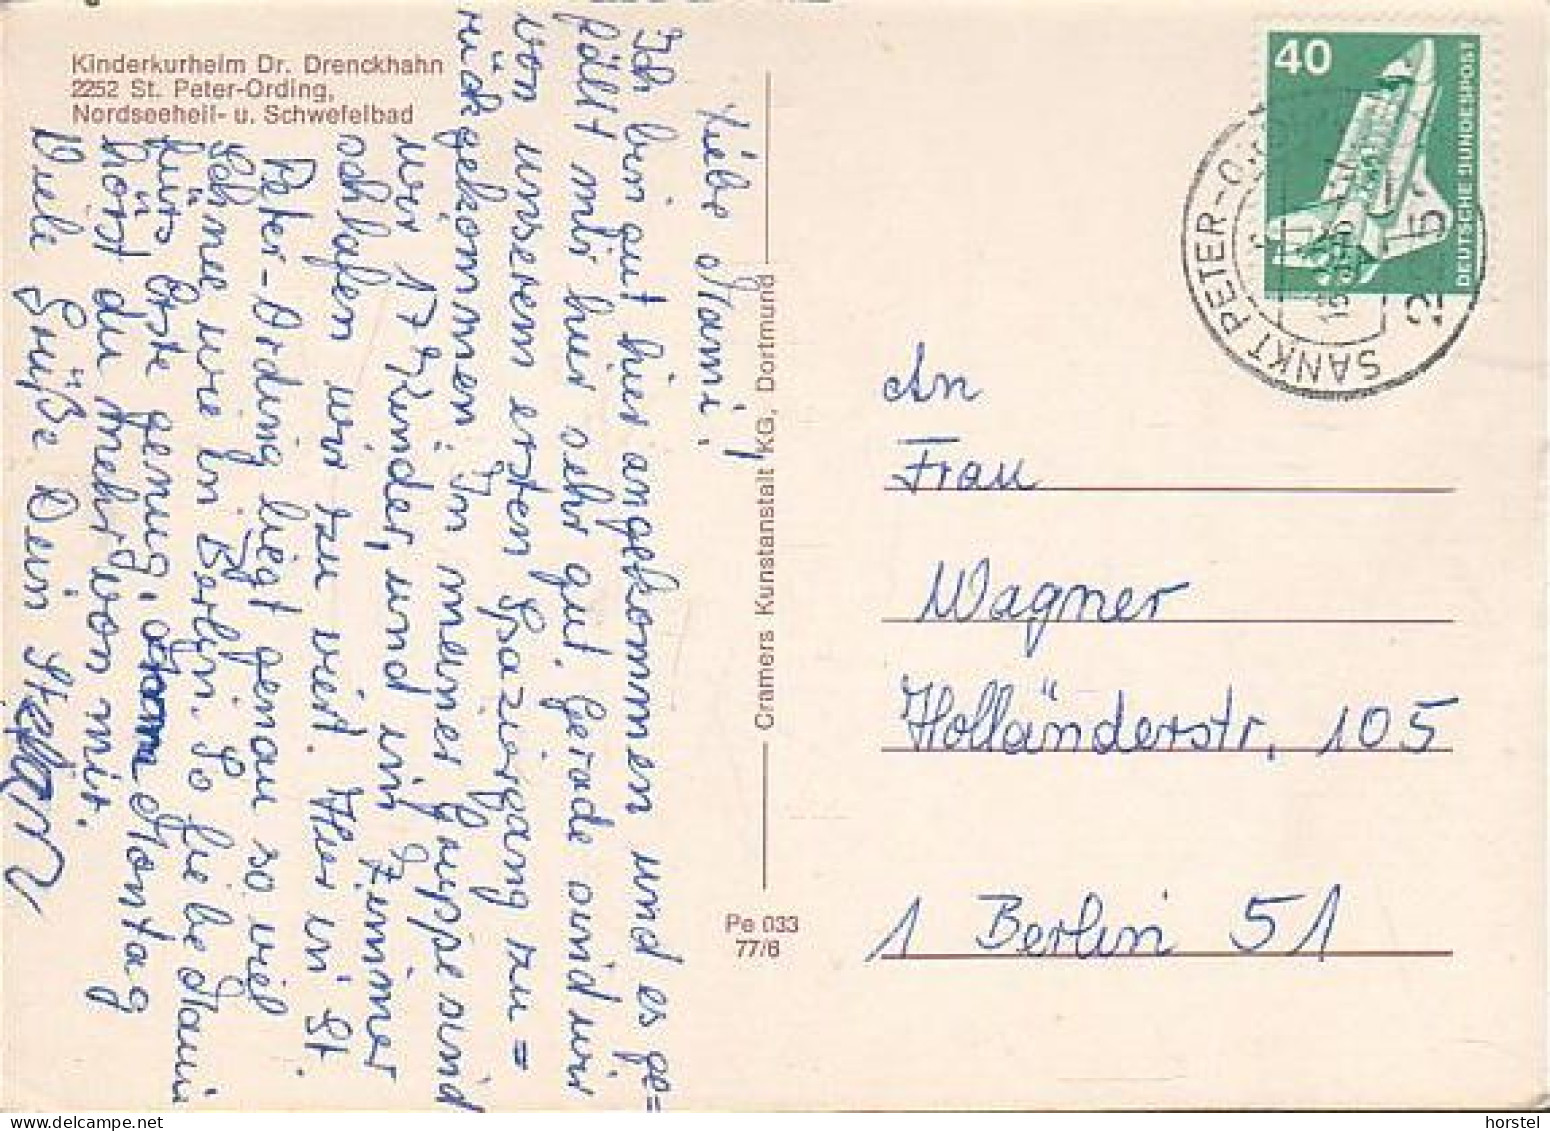 D-25826 St. Peter-Ording - Kinderkurheim Dr. Drenckhahn - "Sandburg Bauen" - Sport - Nice Stamp - St. Peter-Ording